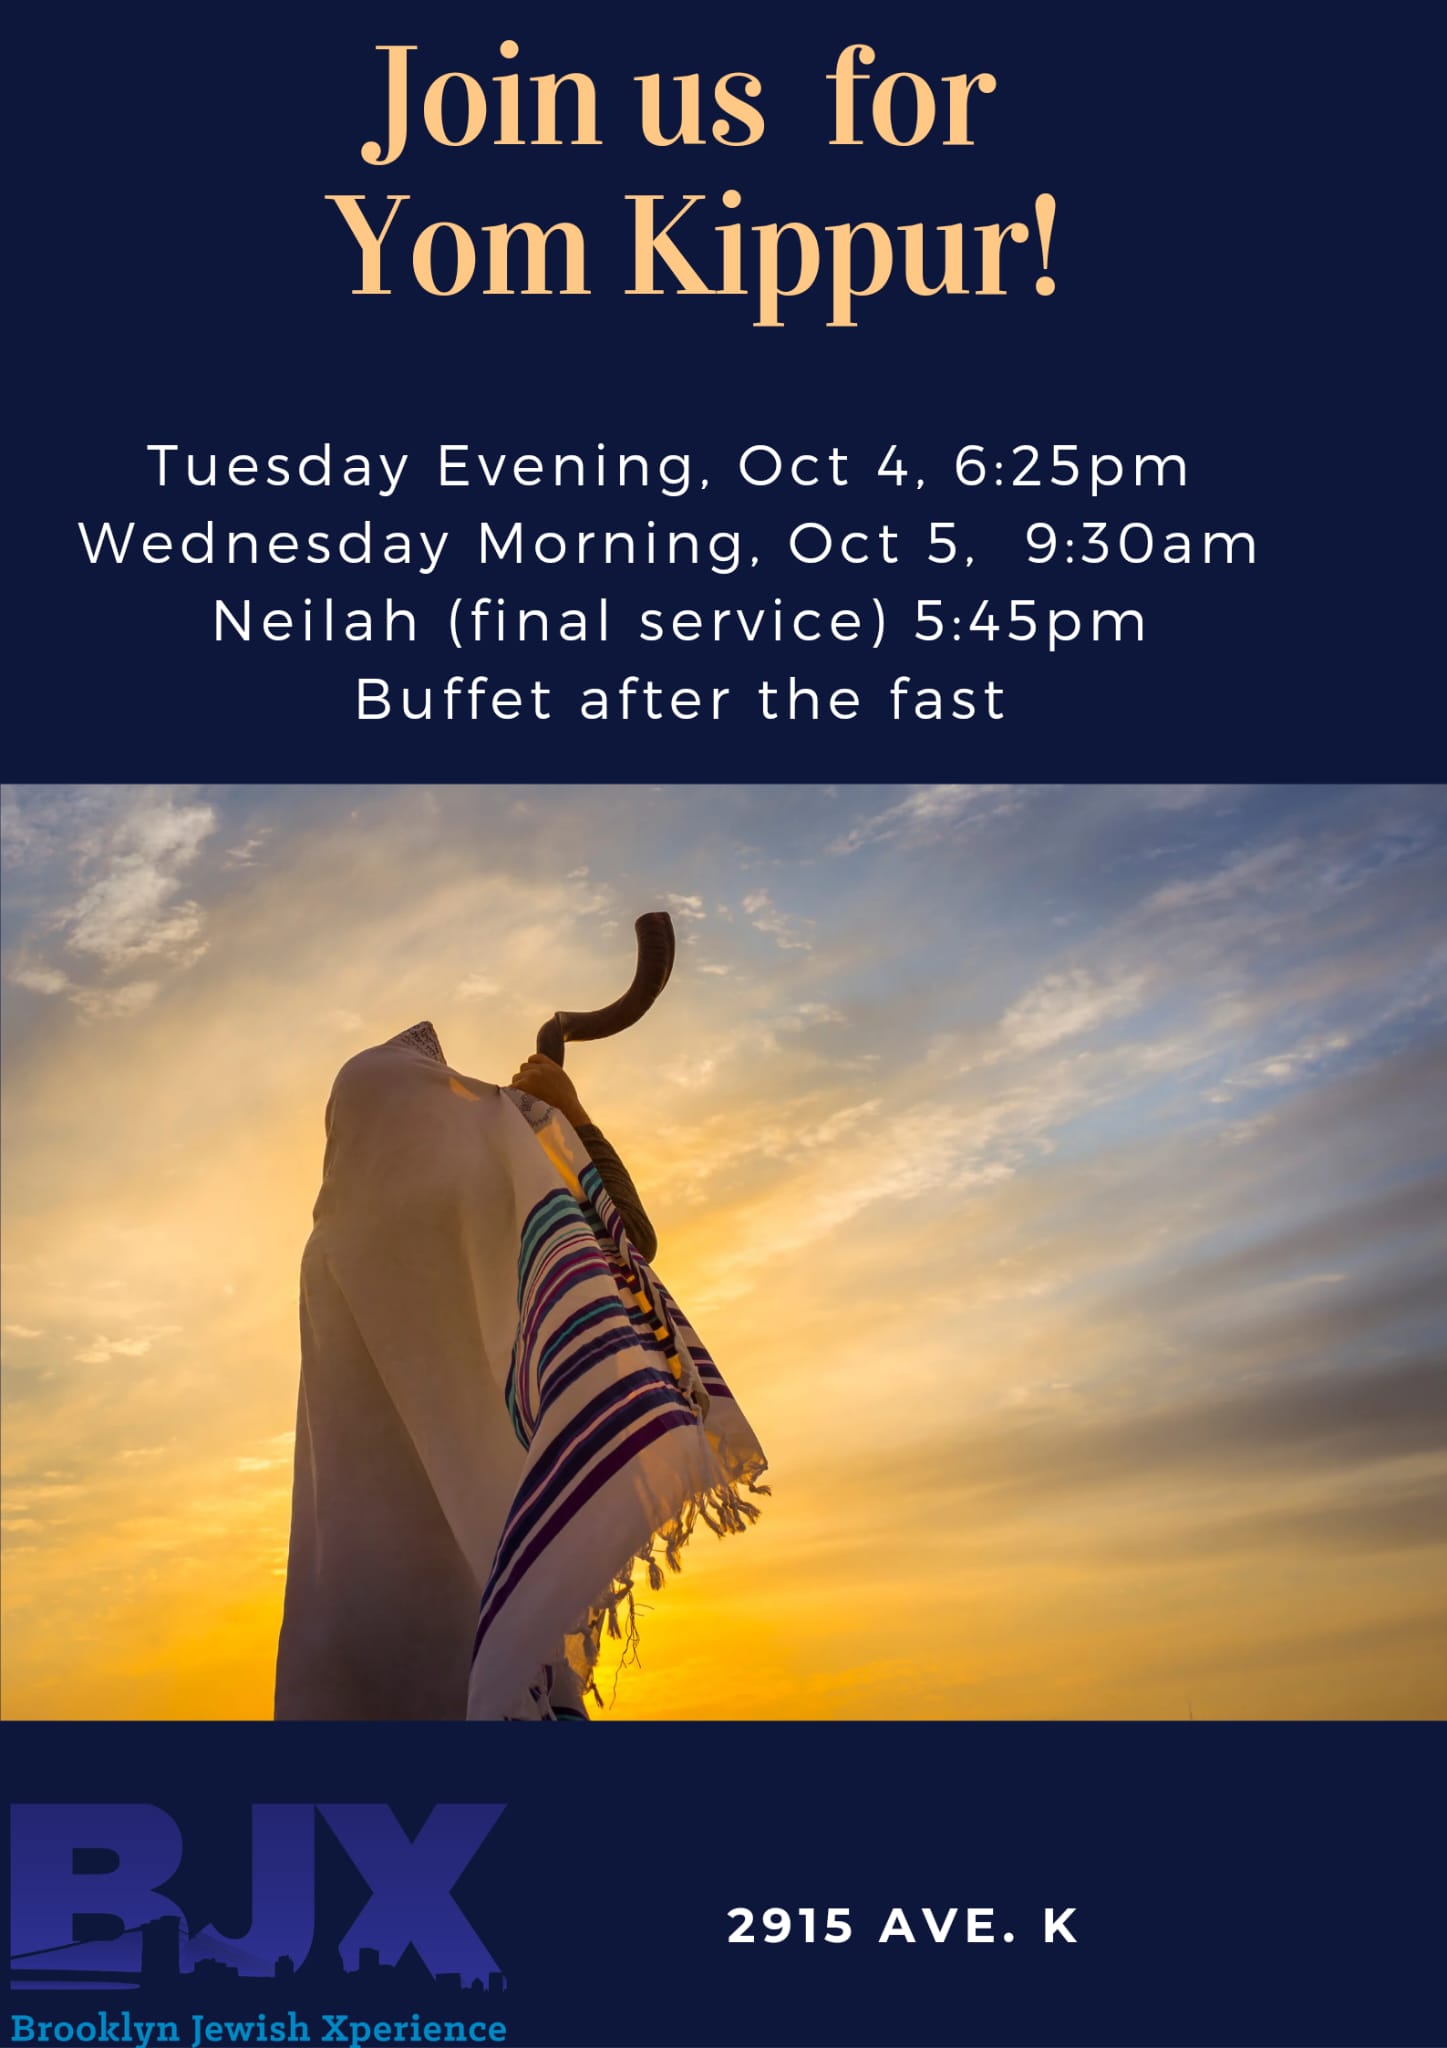 Join us for an Uplifting and Inspiring Yom Kippur